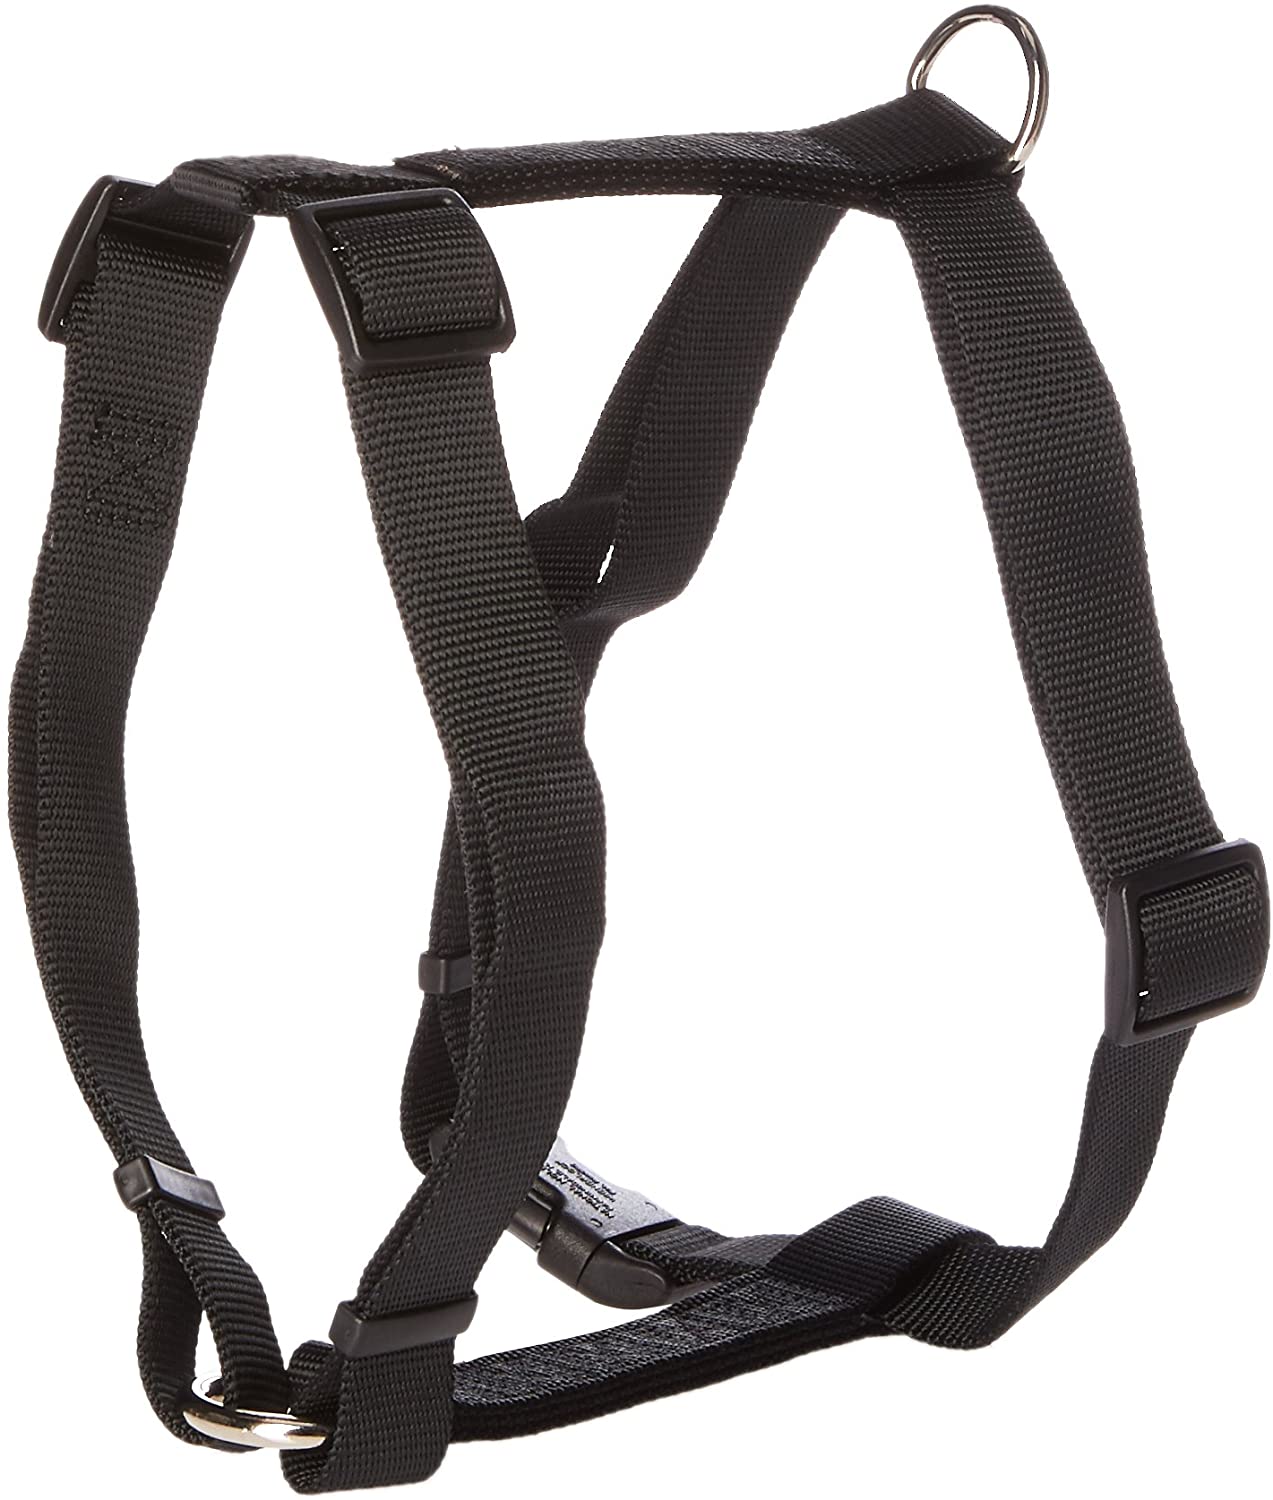 Black Nylon Dog harness